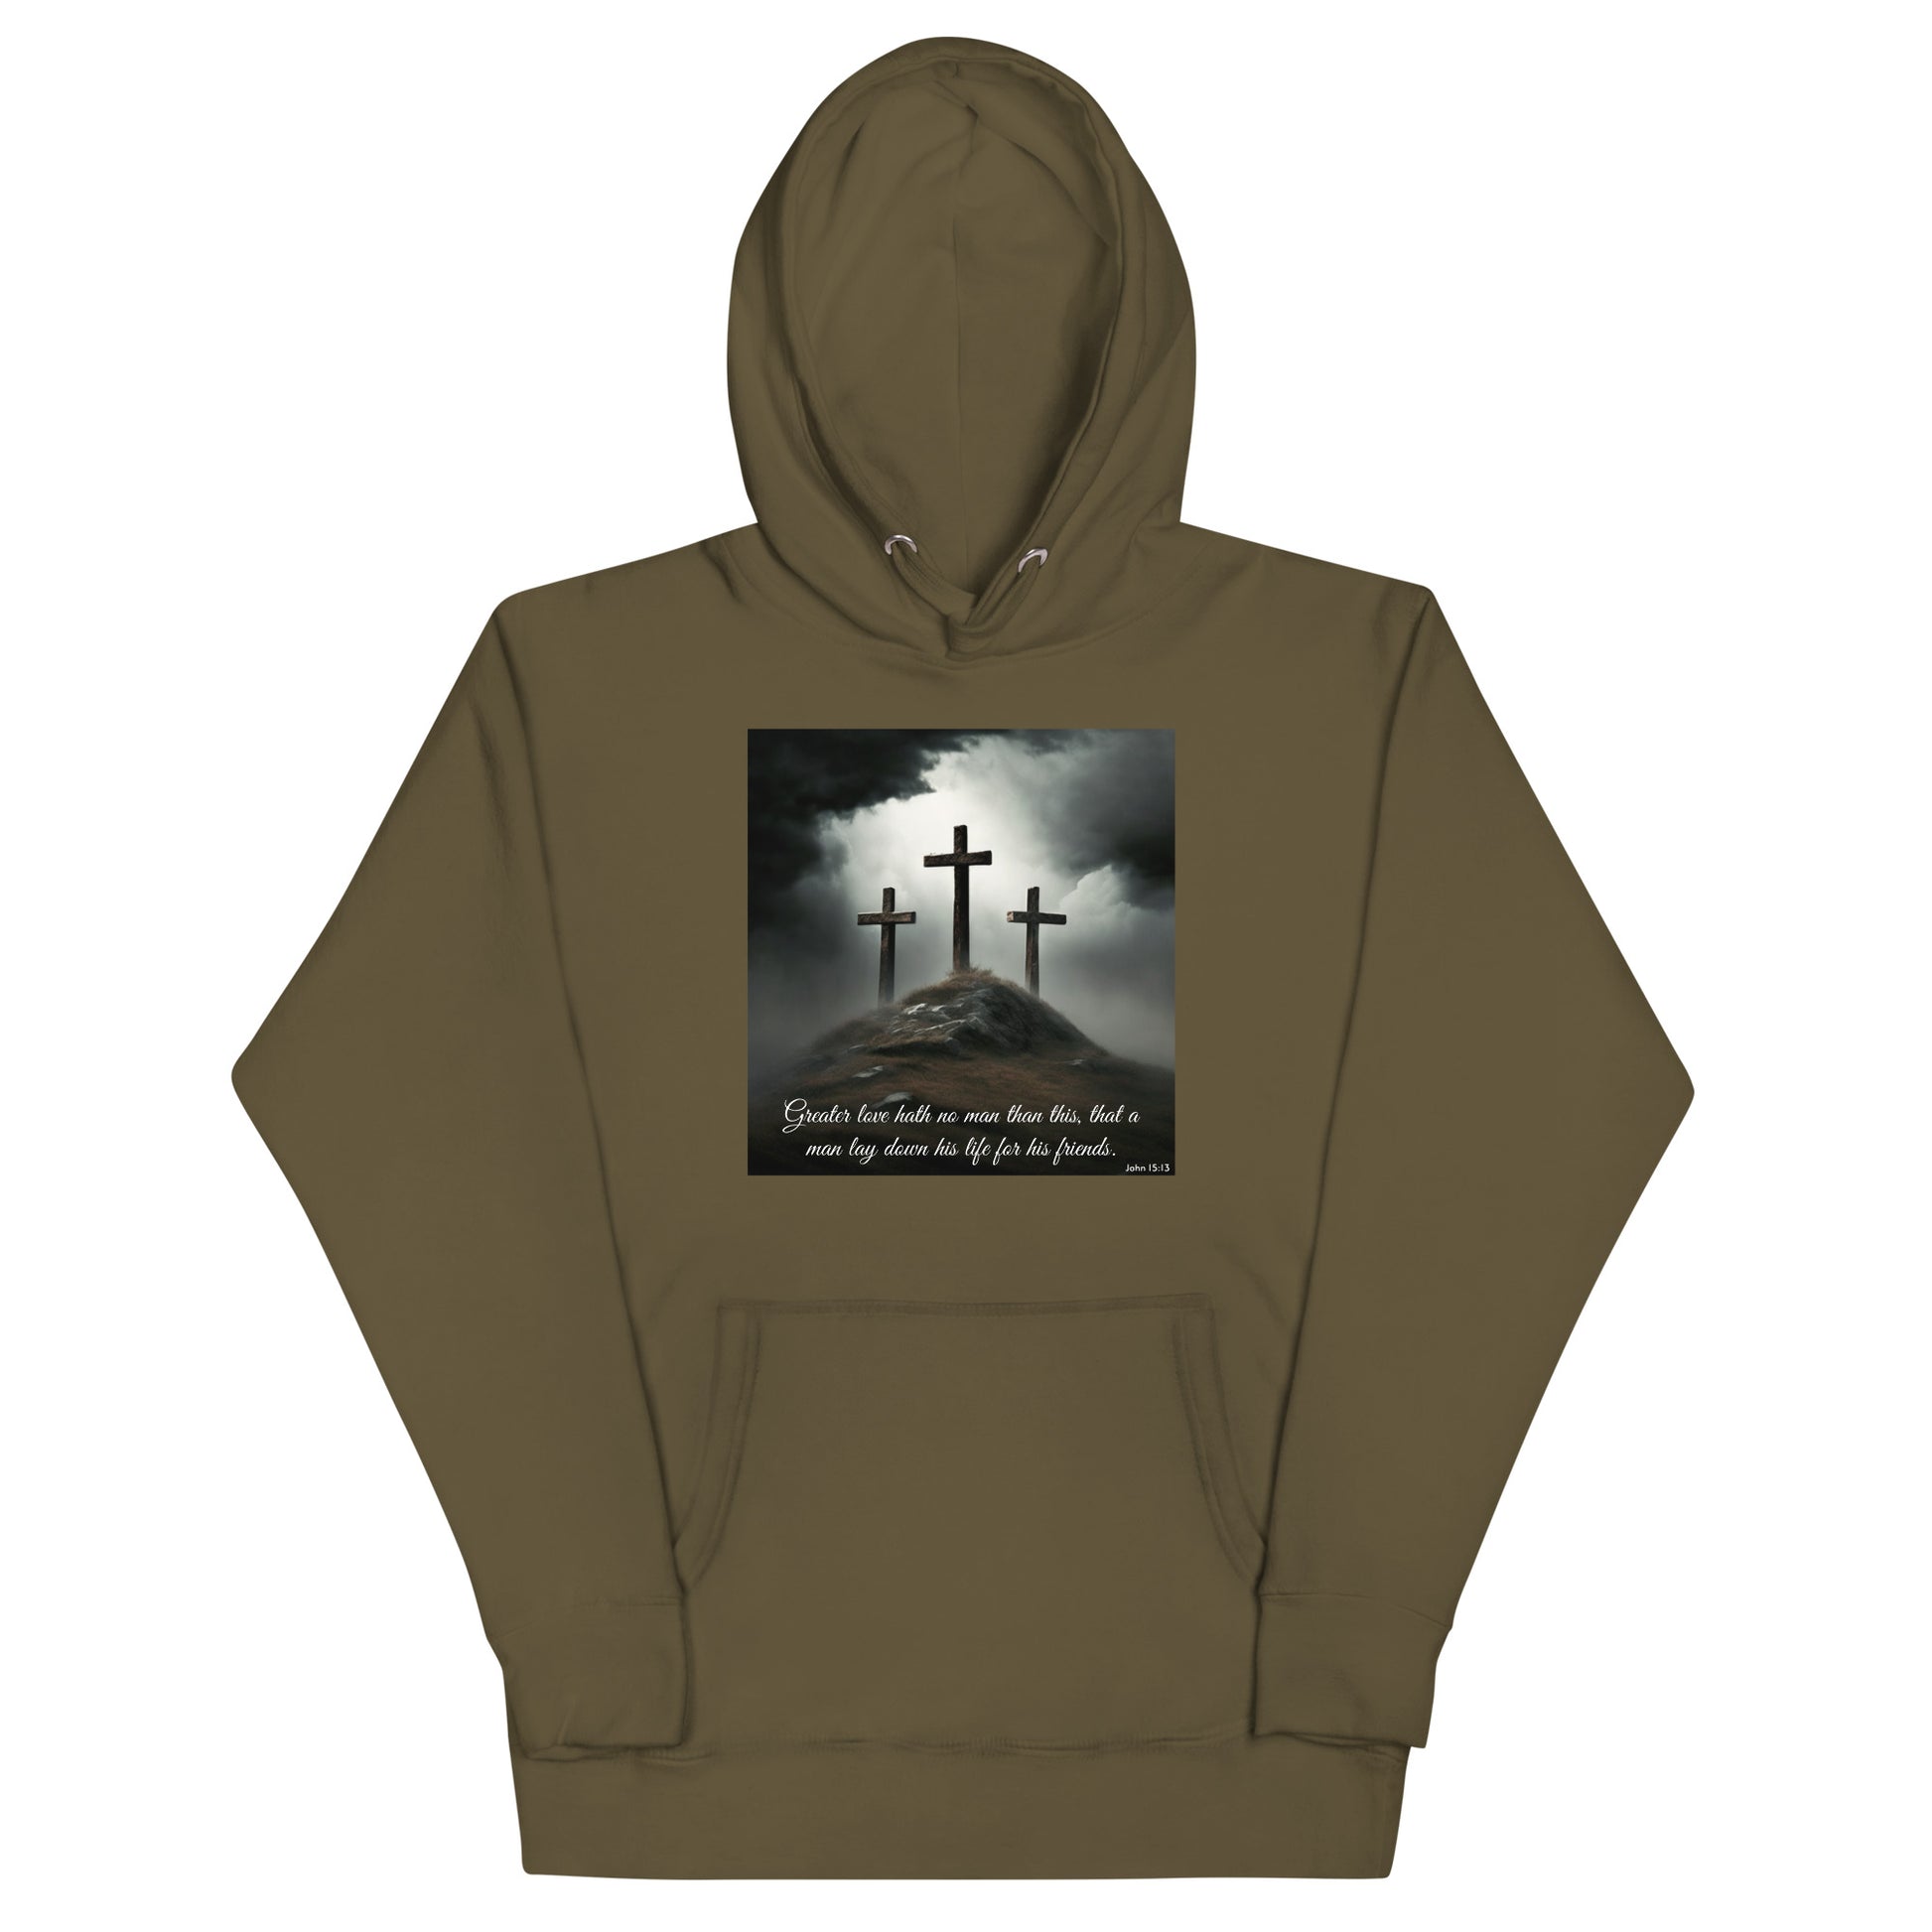 Three Crosses Crucifixion Men's Hooded Sweatshirt John 15:13 Military Green